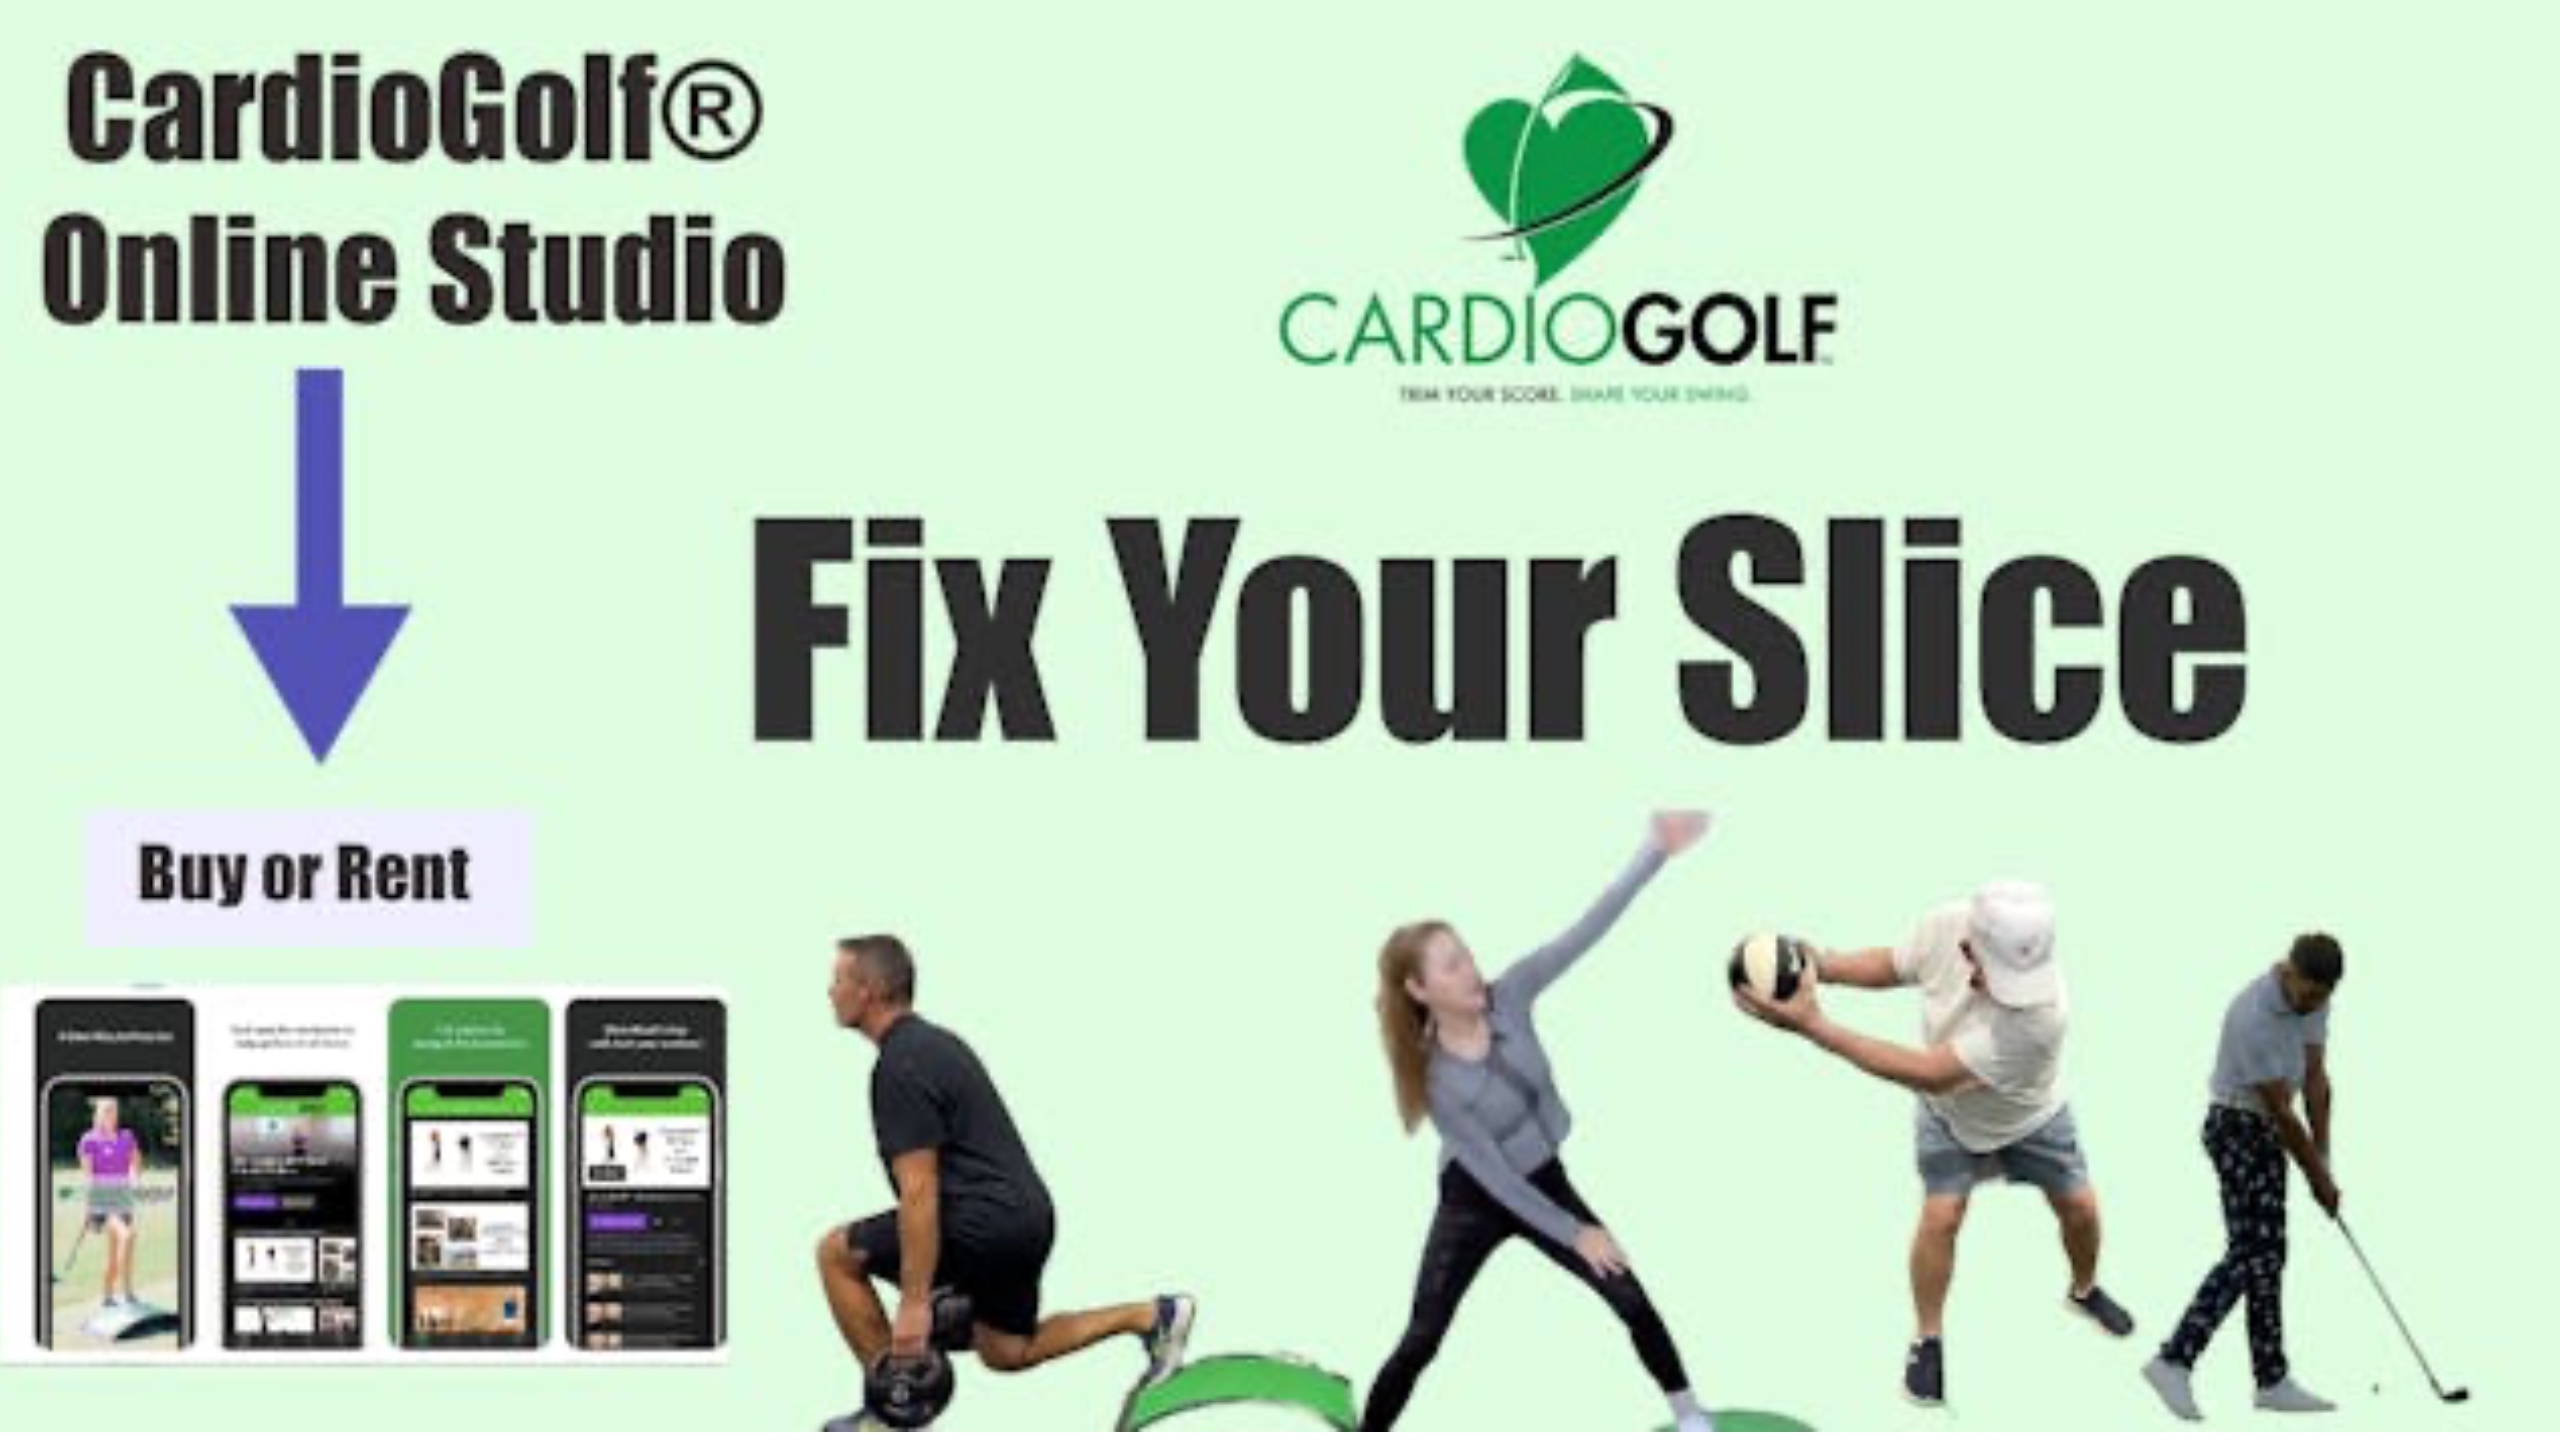 Fix Your Slice Guide By CardioGolf®. CardioGolf.com